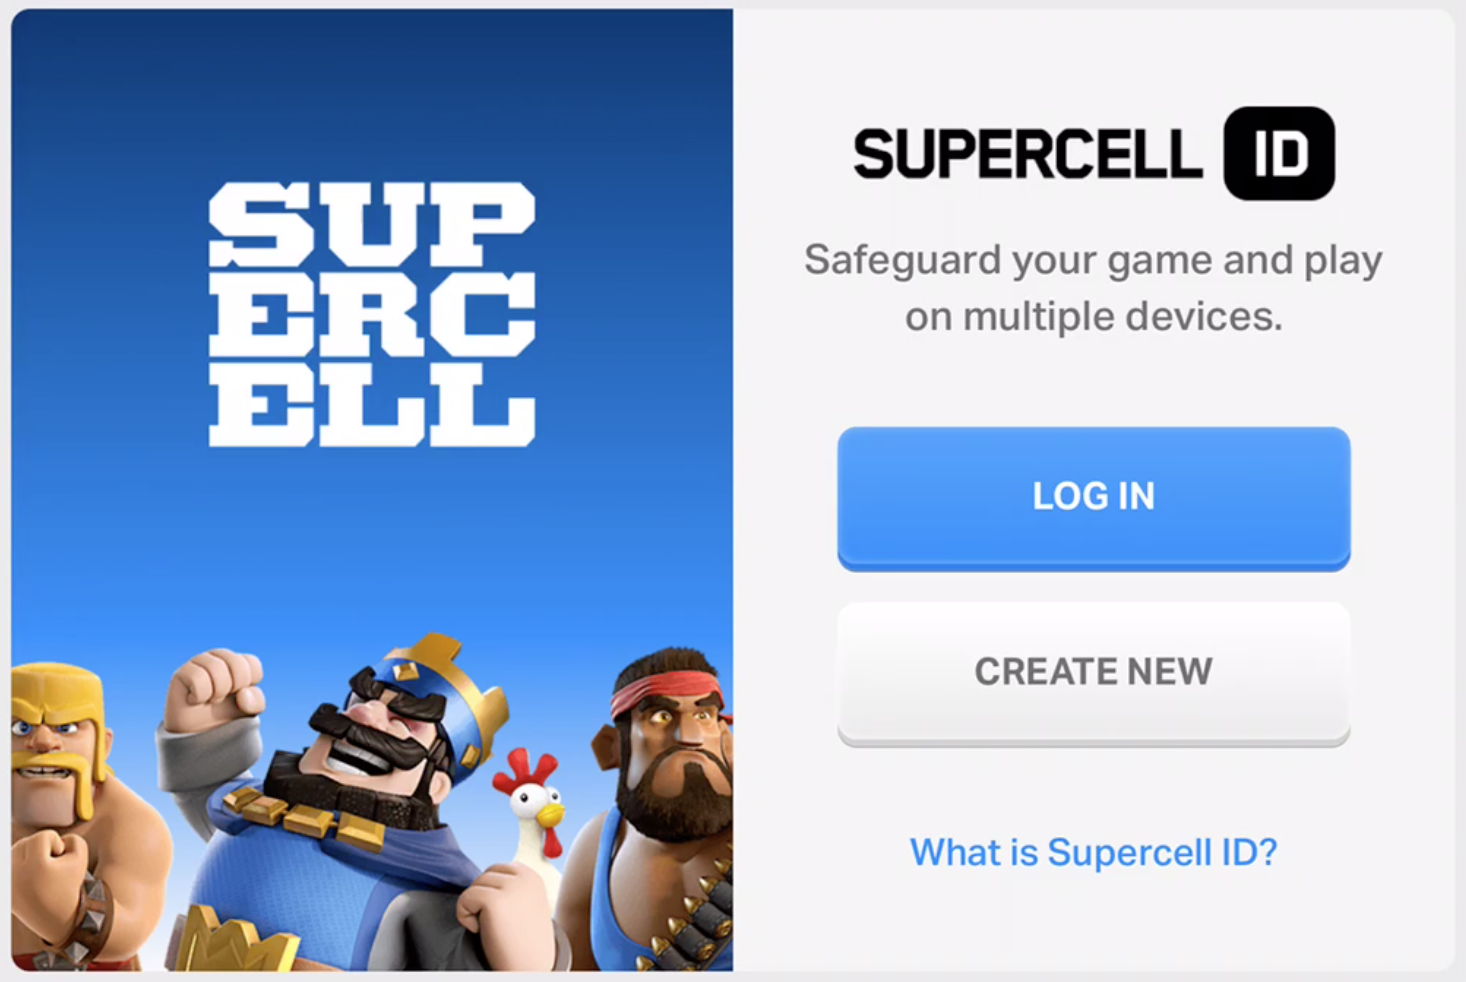 Суперселл ID. Картинки Supercell. Игры Supercell ID. Значок Supercell ID.